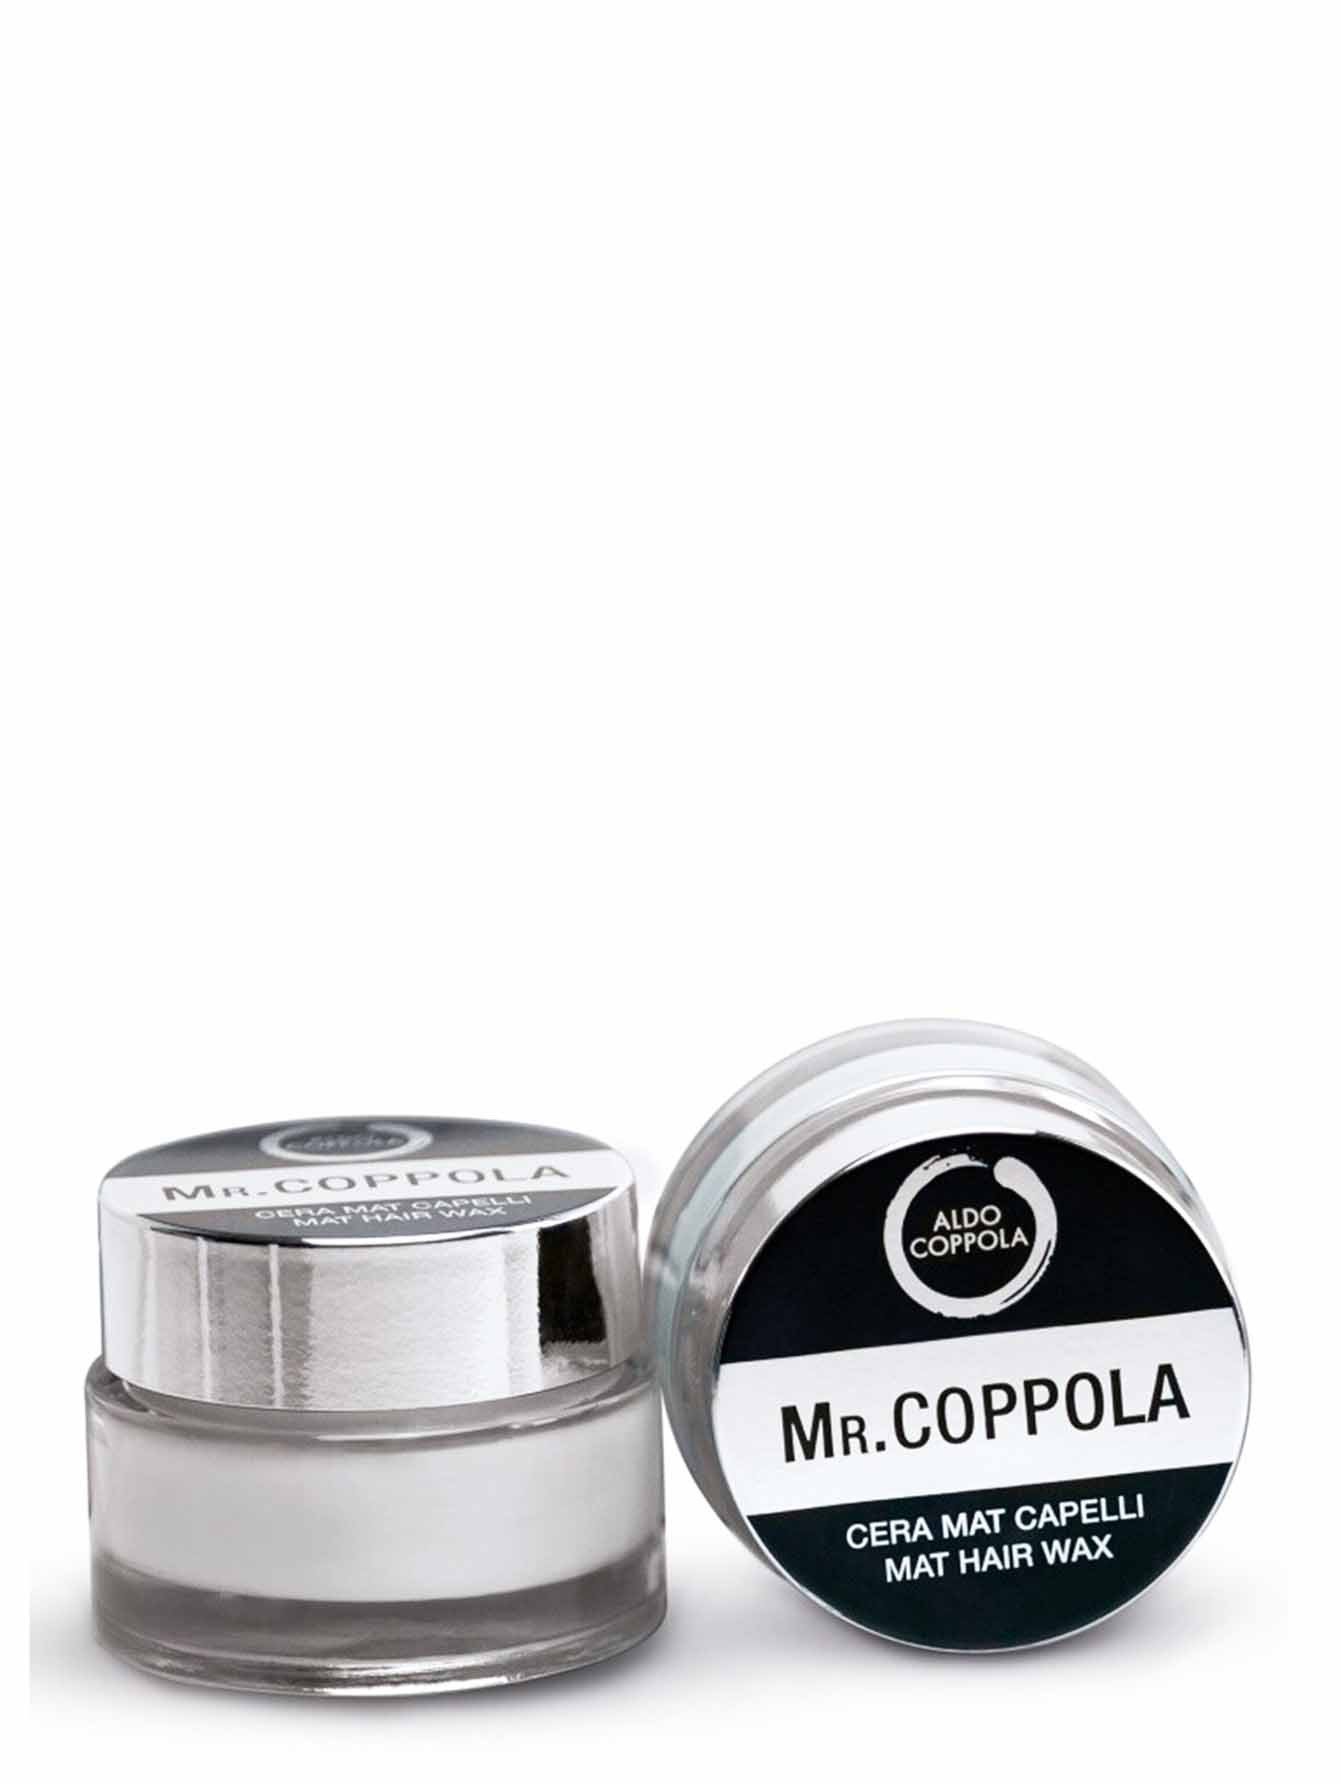 Воск матирующий для волос Mr. Coppola, 50 мл - Общий вид